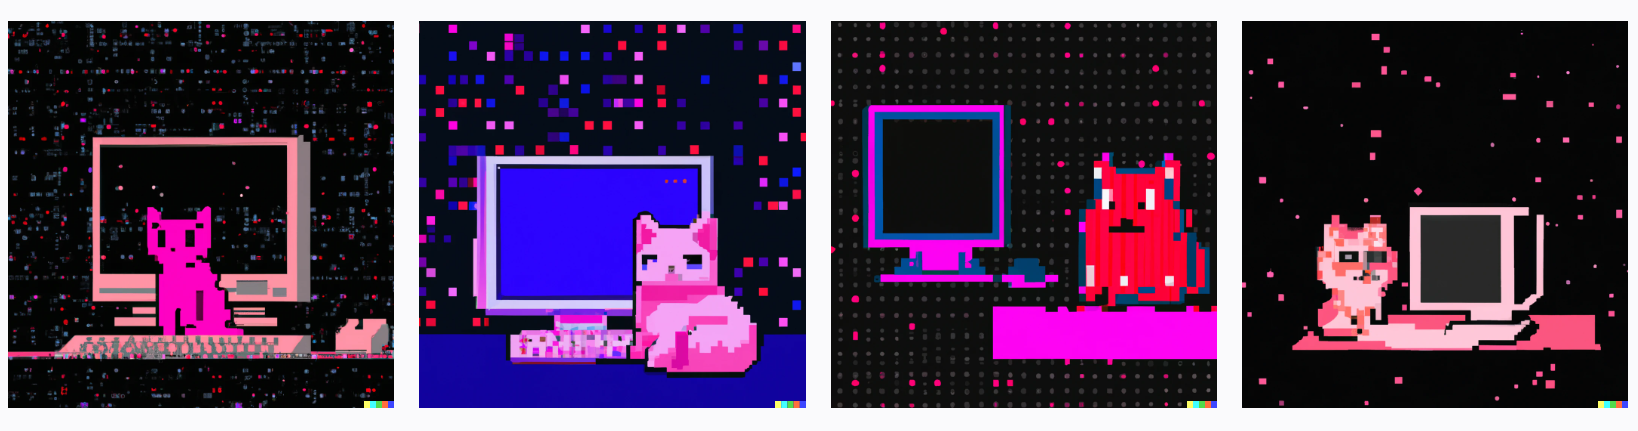 pink pixel cat sitting in front of computer, digital art, pixel art, galaxy background